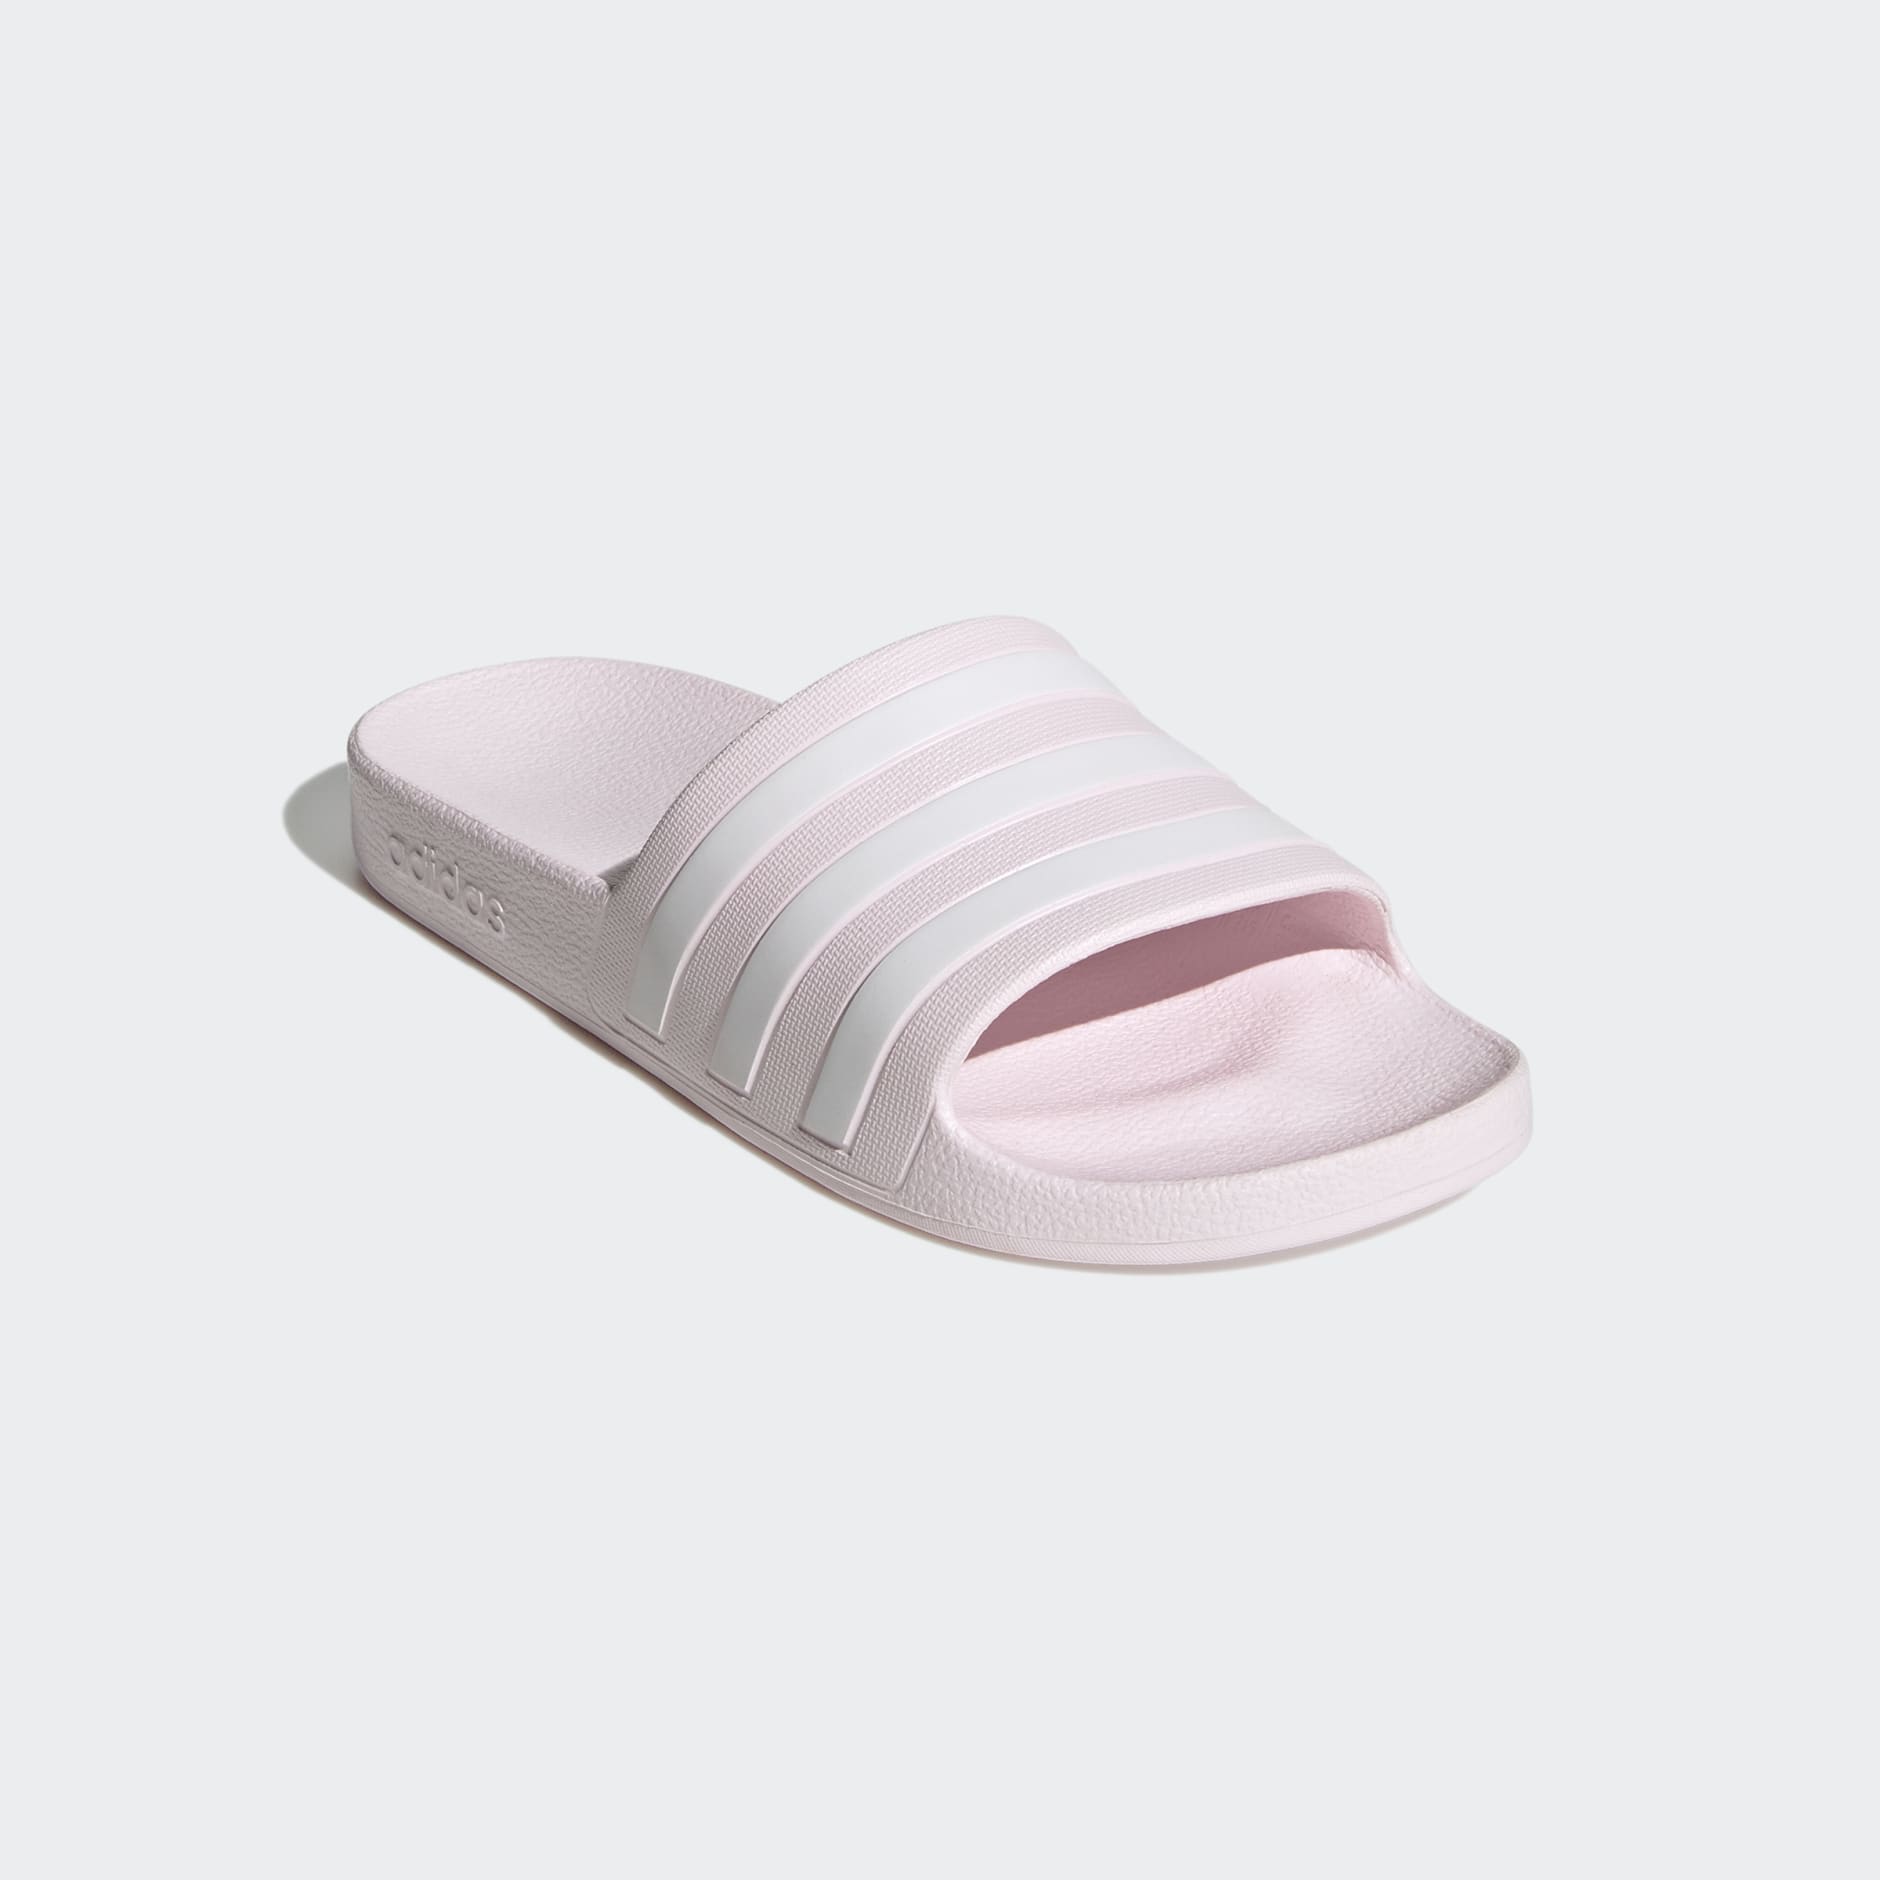 Shoes - Adilette Aqua Slides - Pink | adidas South Africa